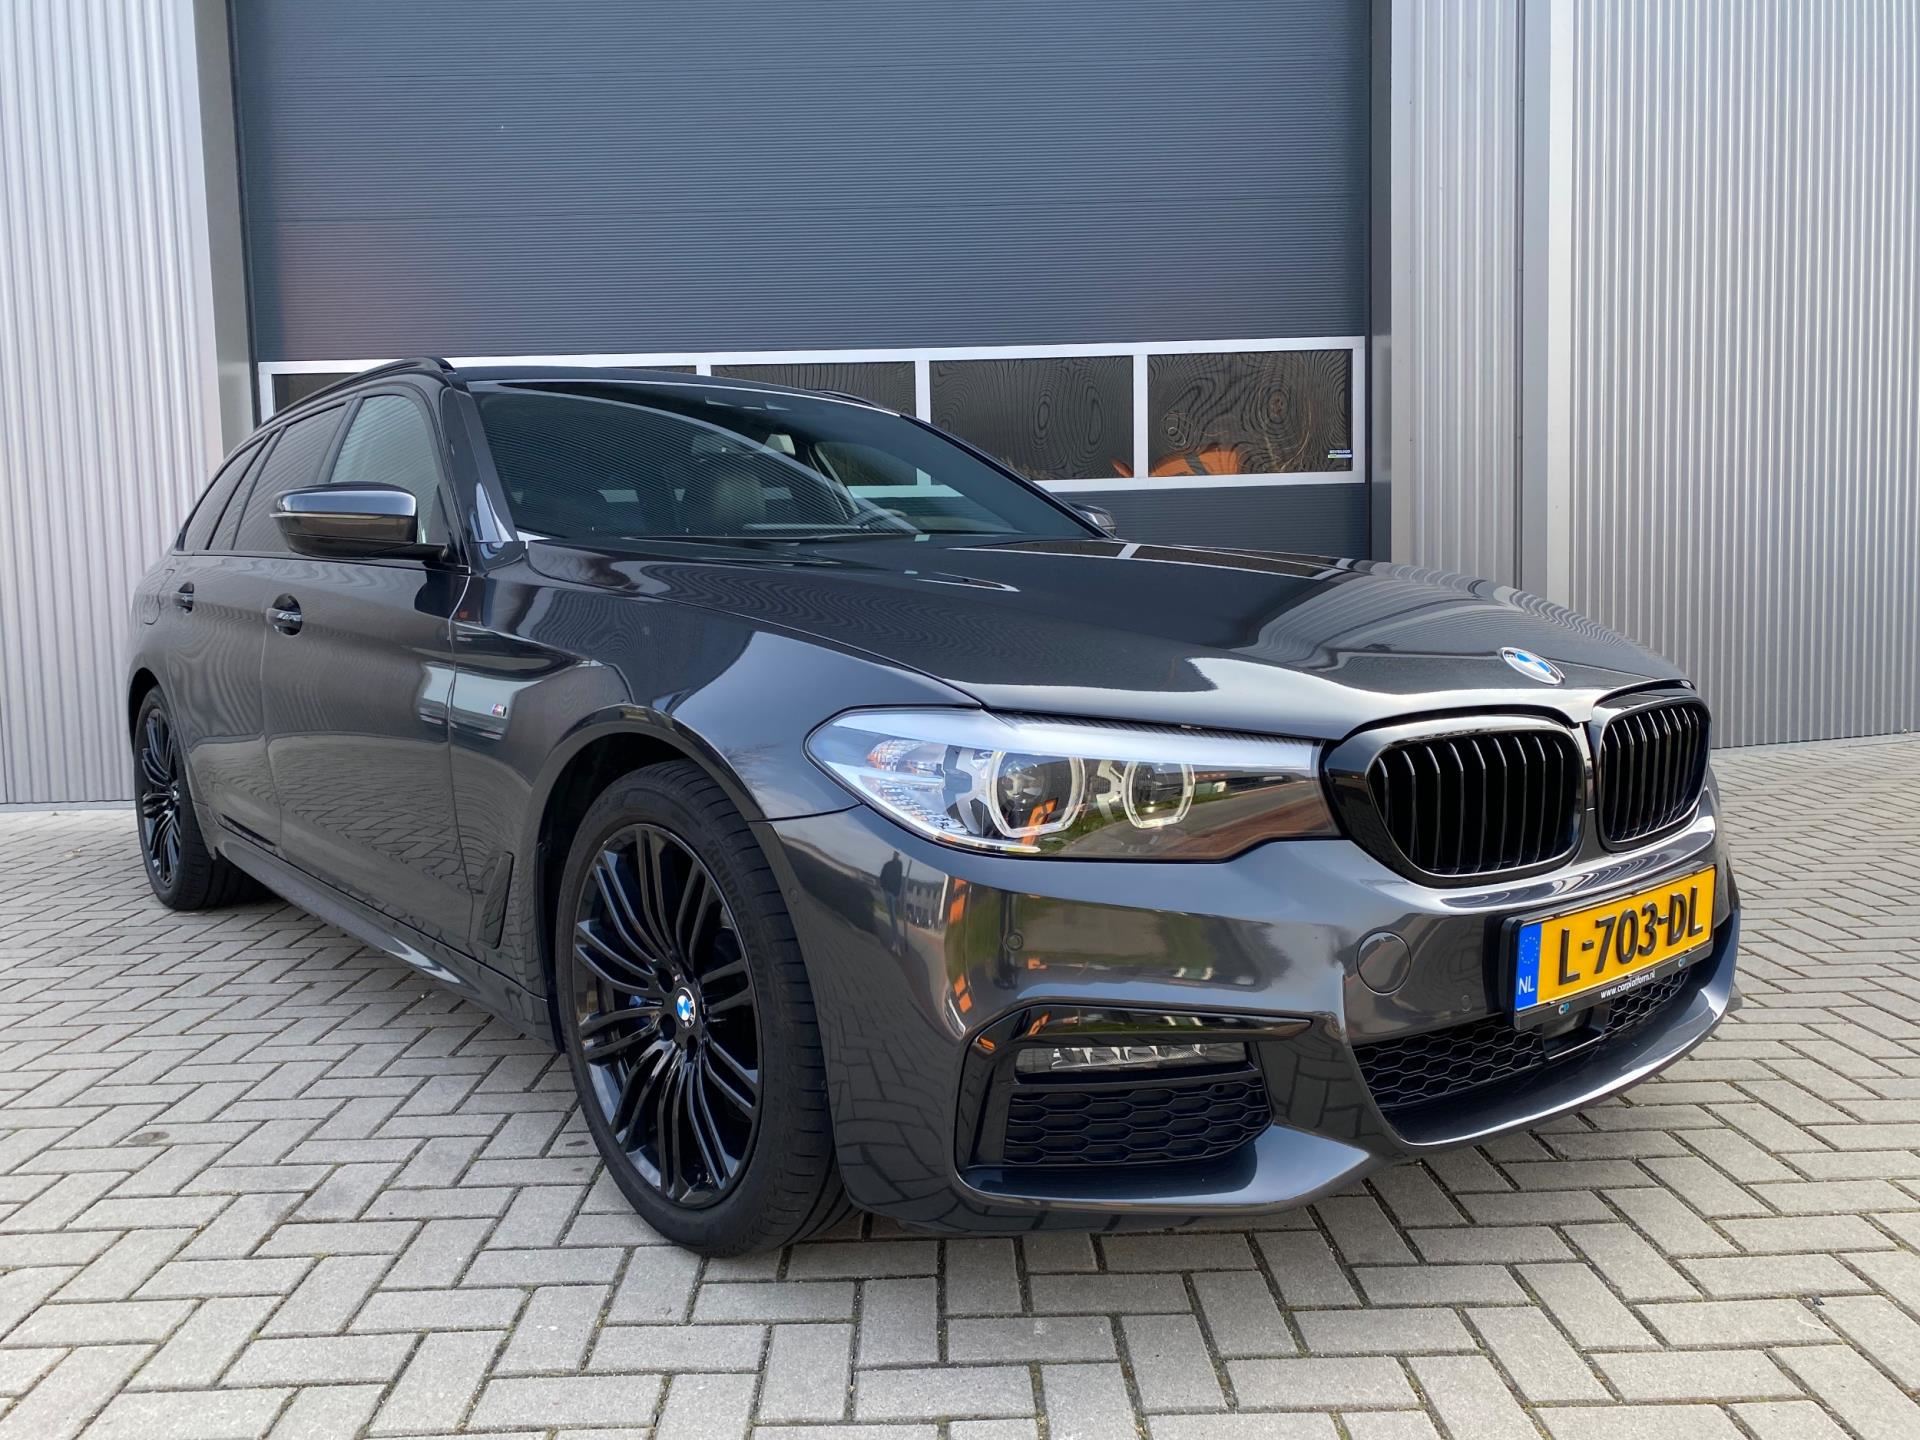 BMW Touring - 530i "M- pakket" Benzine uit 2019 - www.carplatform.nl